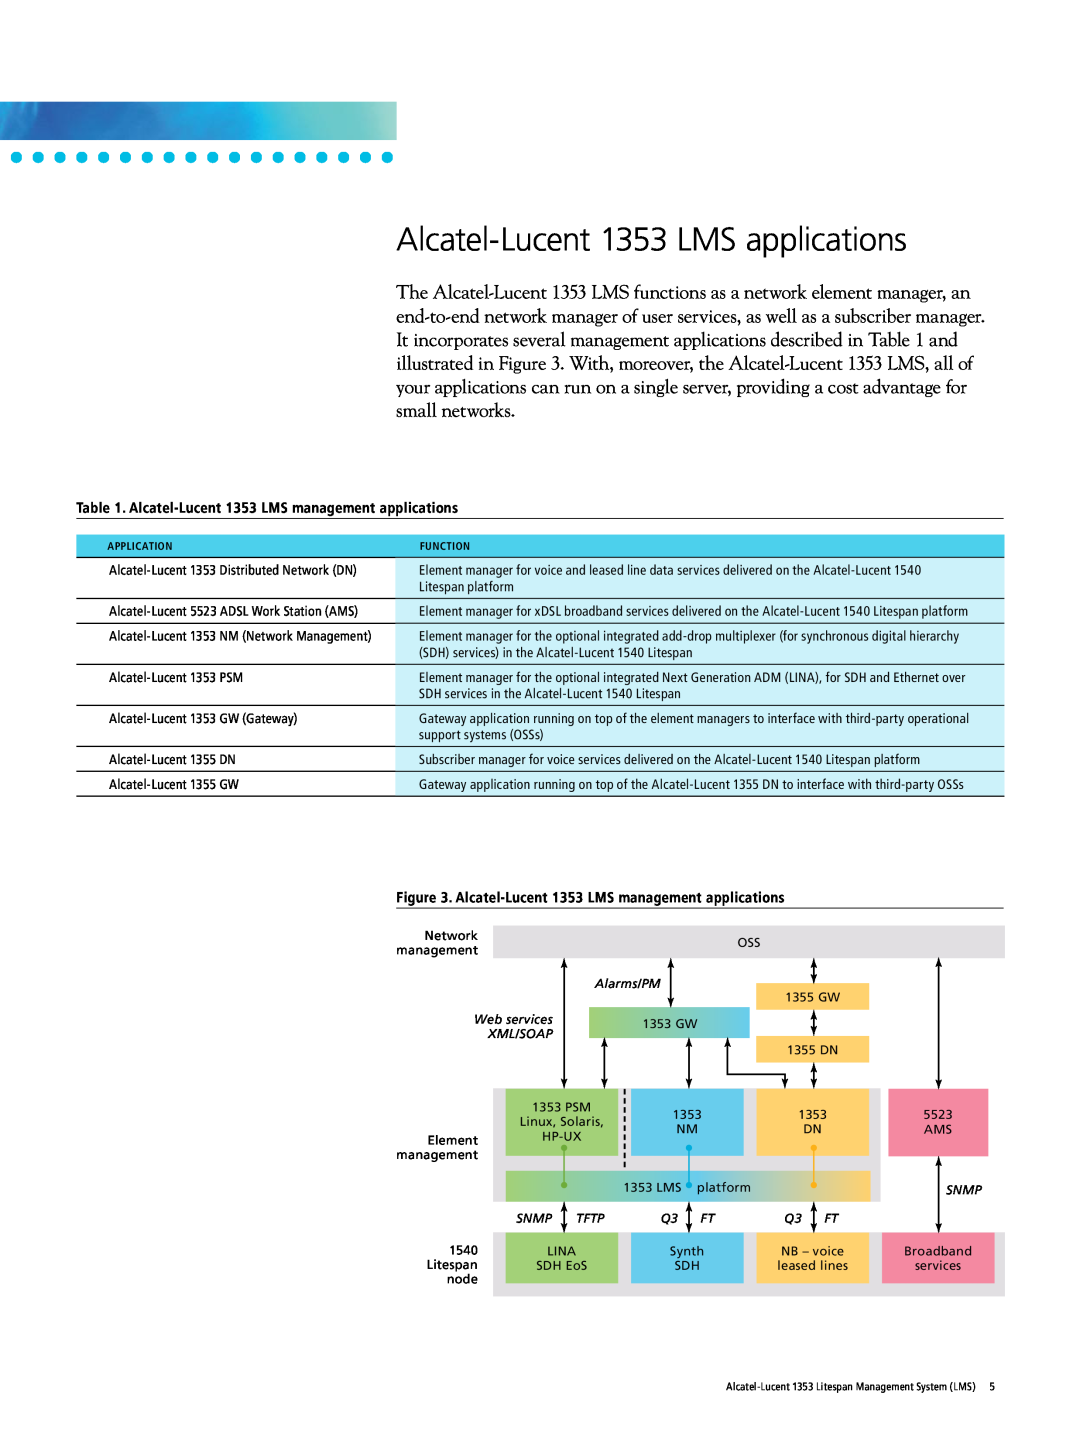 Alcatel-Lucent manual Alcatel-Lucent 1353 LMS applications, Alcatel-Lucent 1353 LMS management applications 